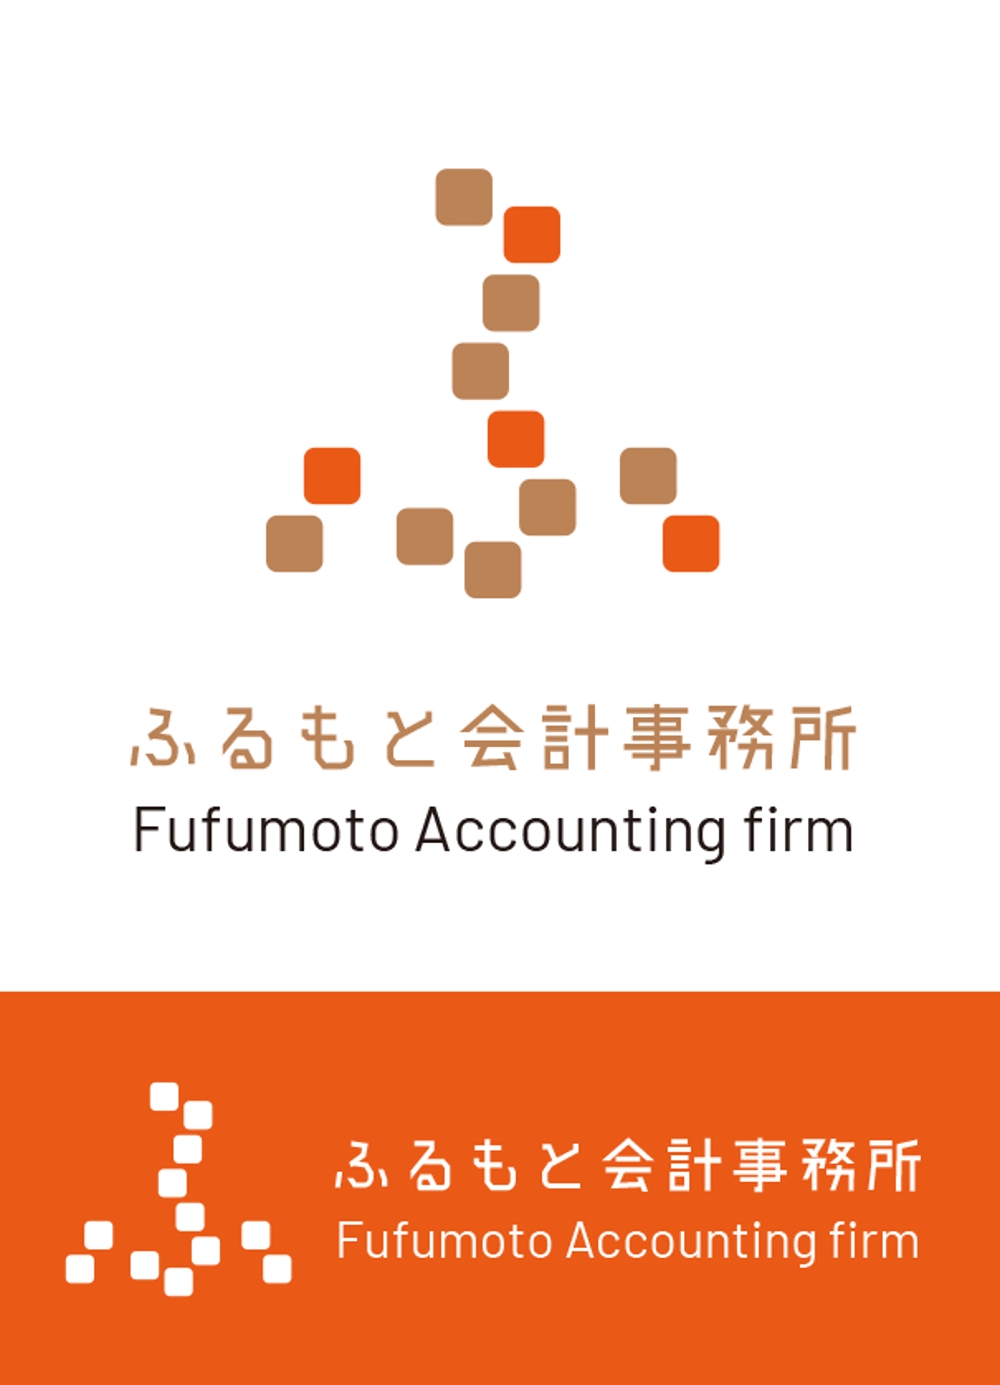 furumoto_logo.jpg